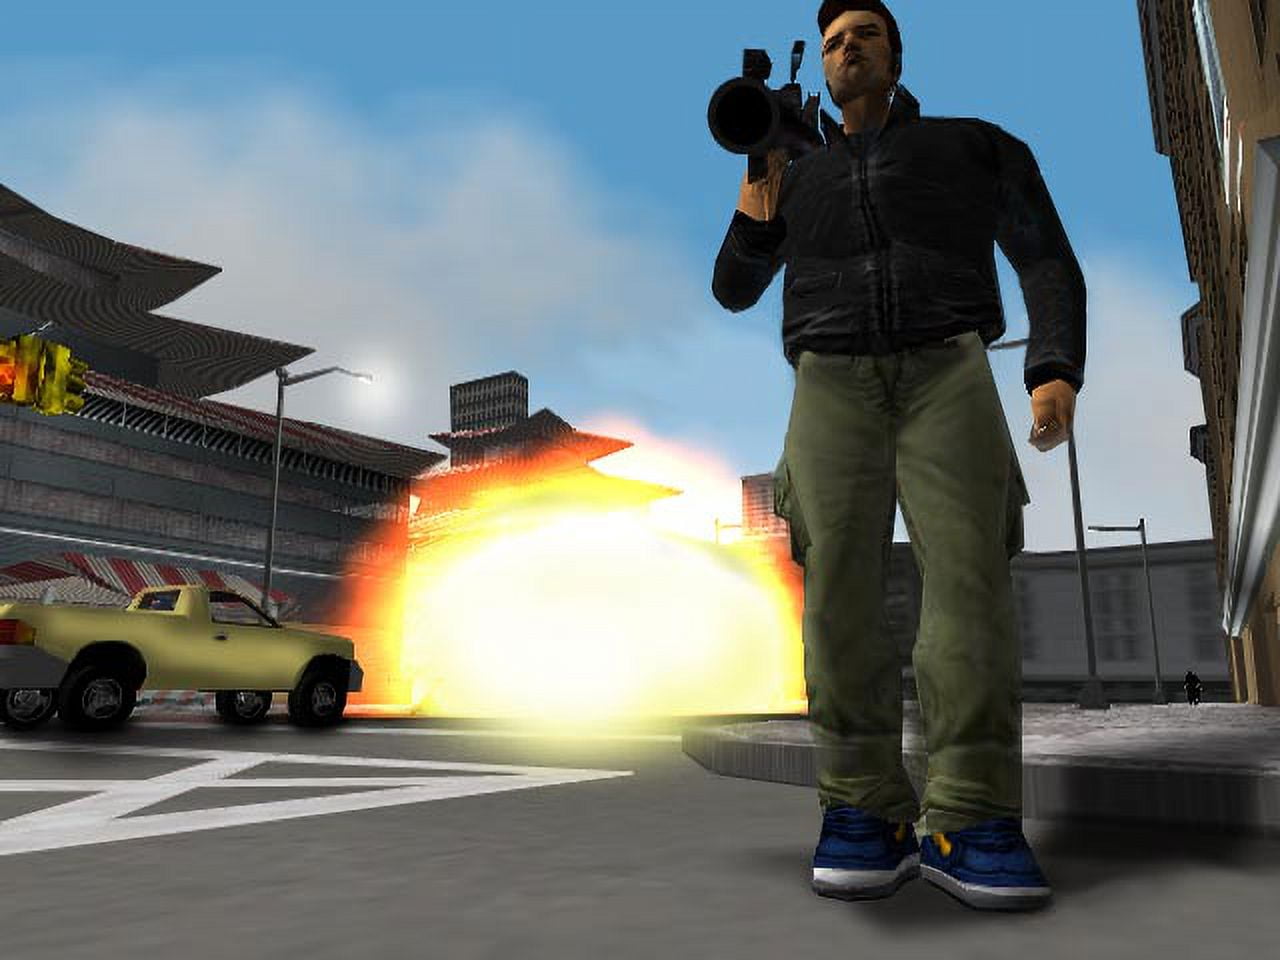 Shady2K on X: Your top 5? 1.) San Andreas 2.) GTA IV 3.) GTA Vice